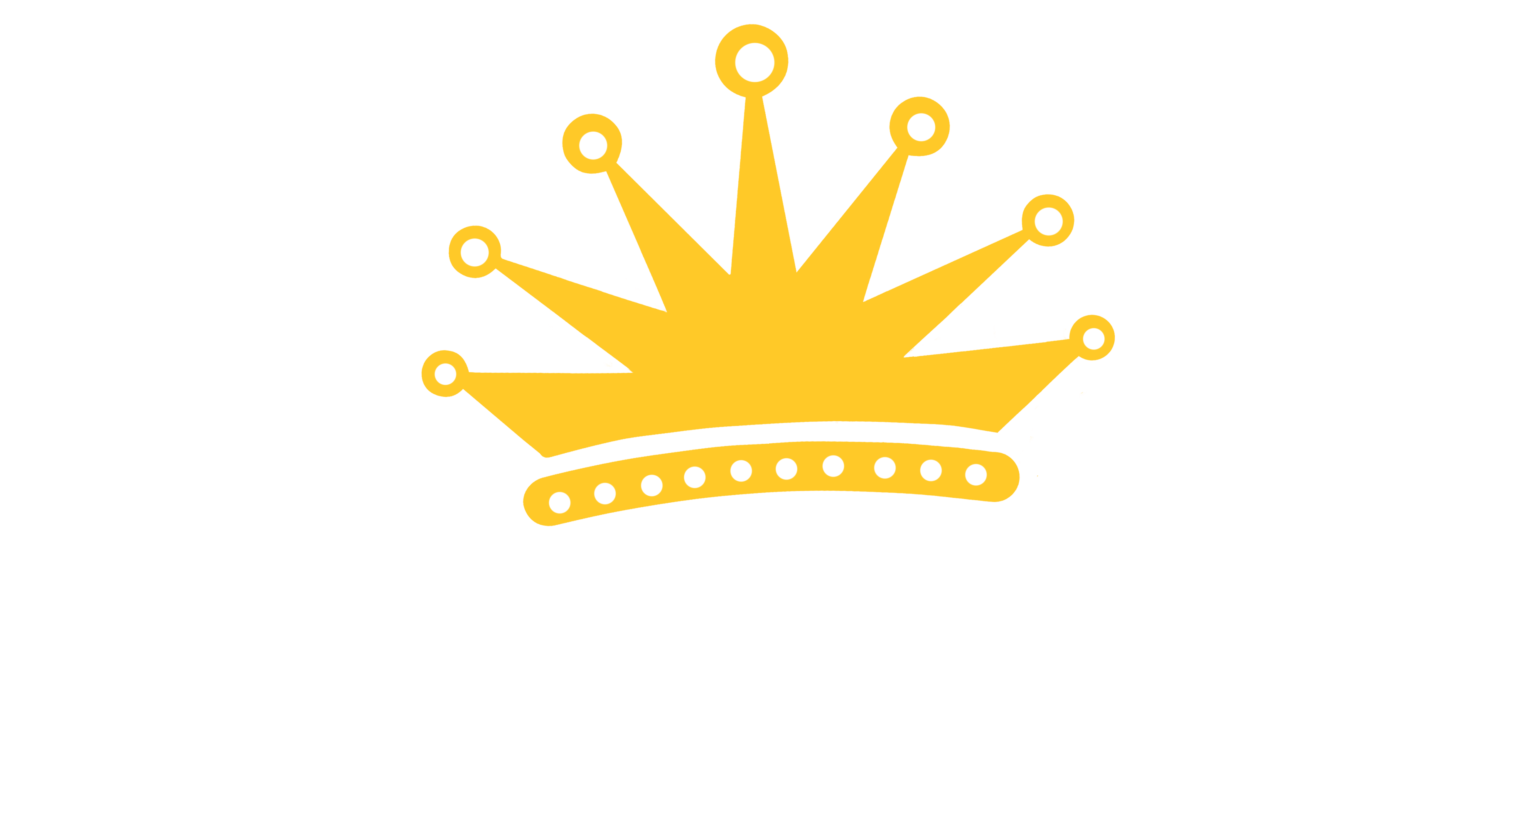 Crowne-Dental-Jimaii-Design-1536x838